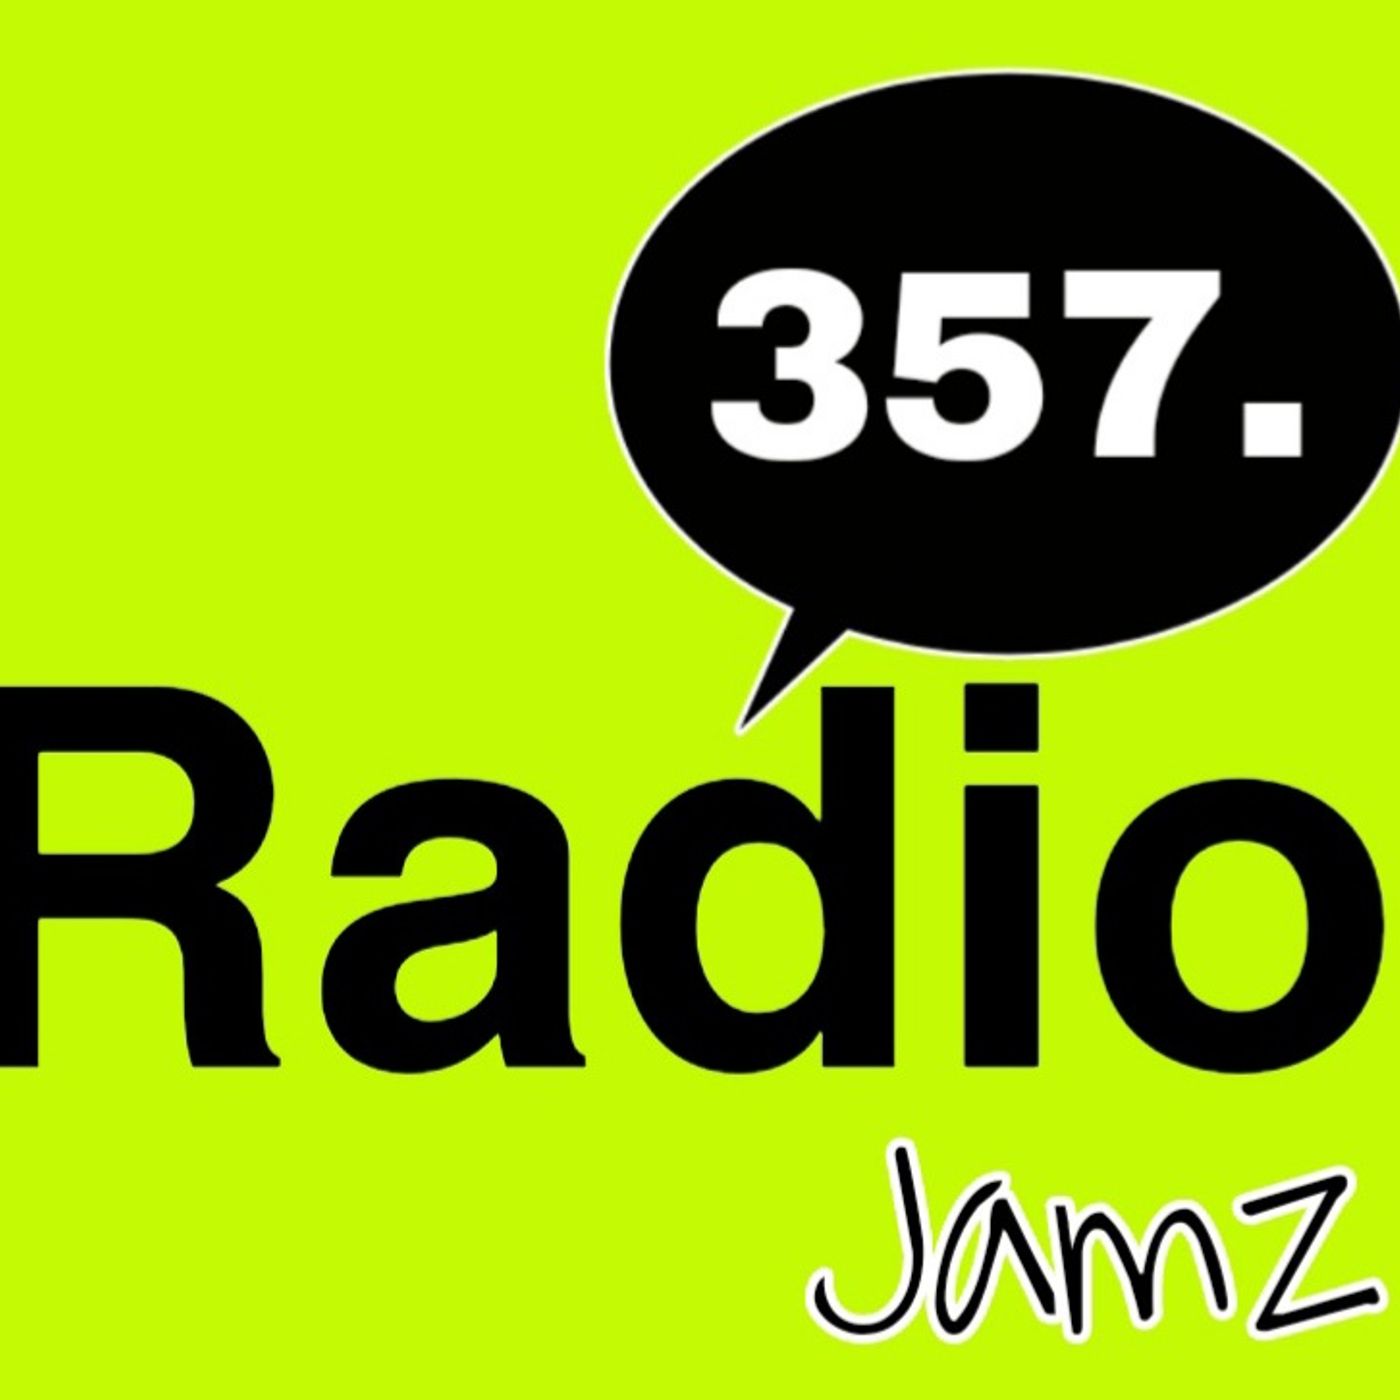 357 RADIO JAMZ